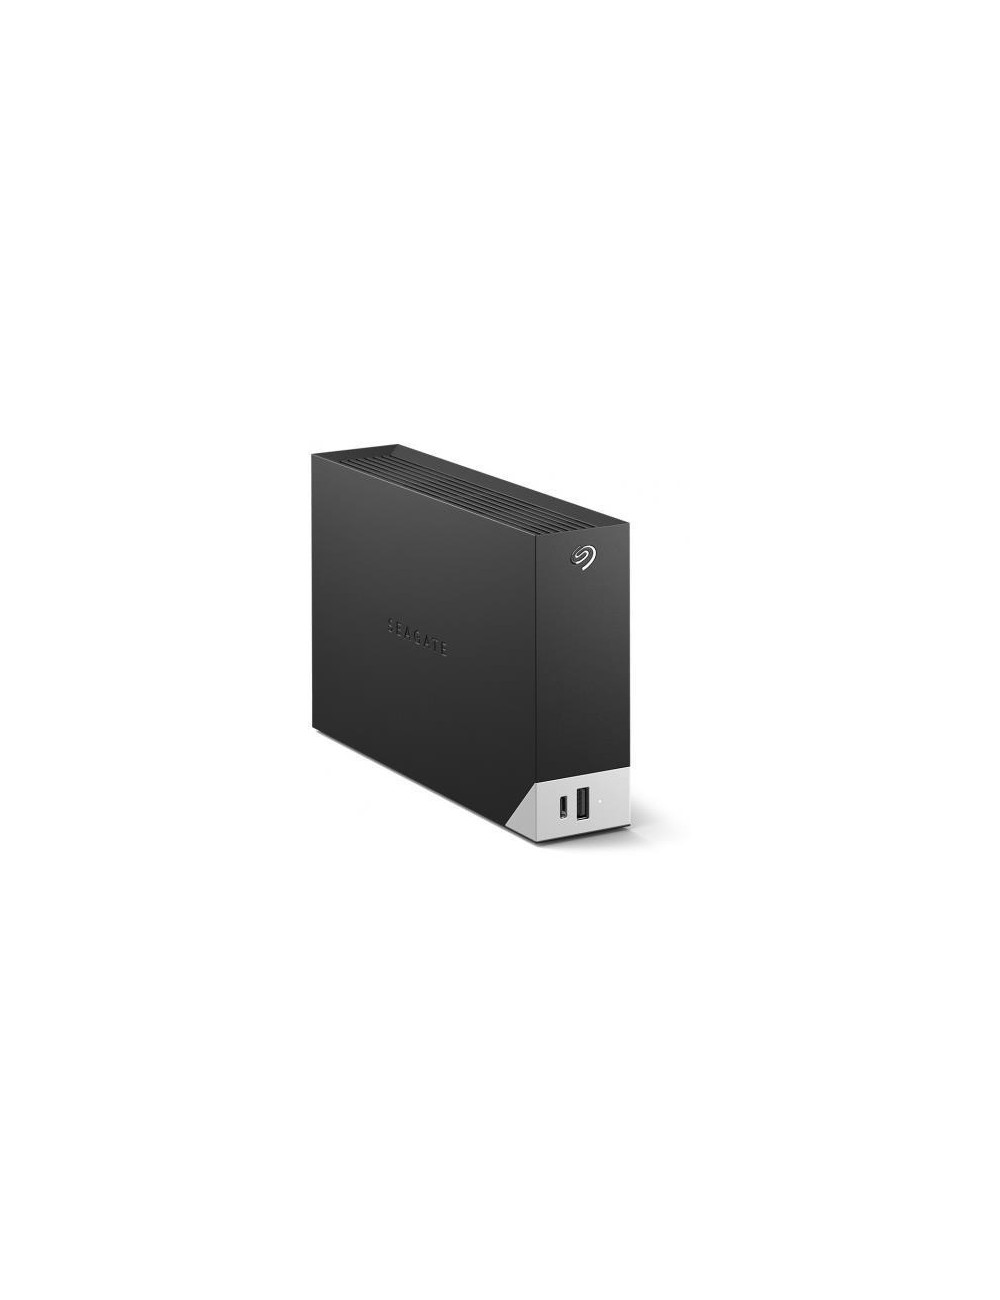 External HDD|SEAGATE|One Touch|STLC4000400|4TB|USB 3.0|USB-C|STLC4000400